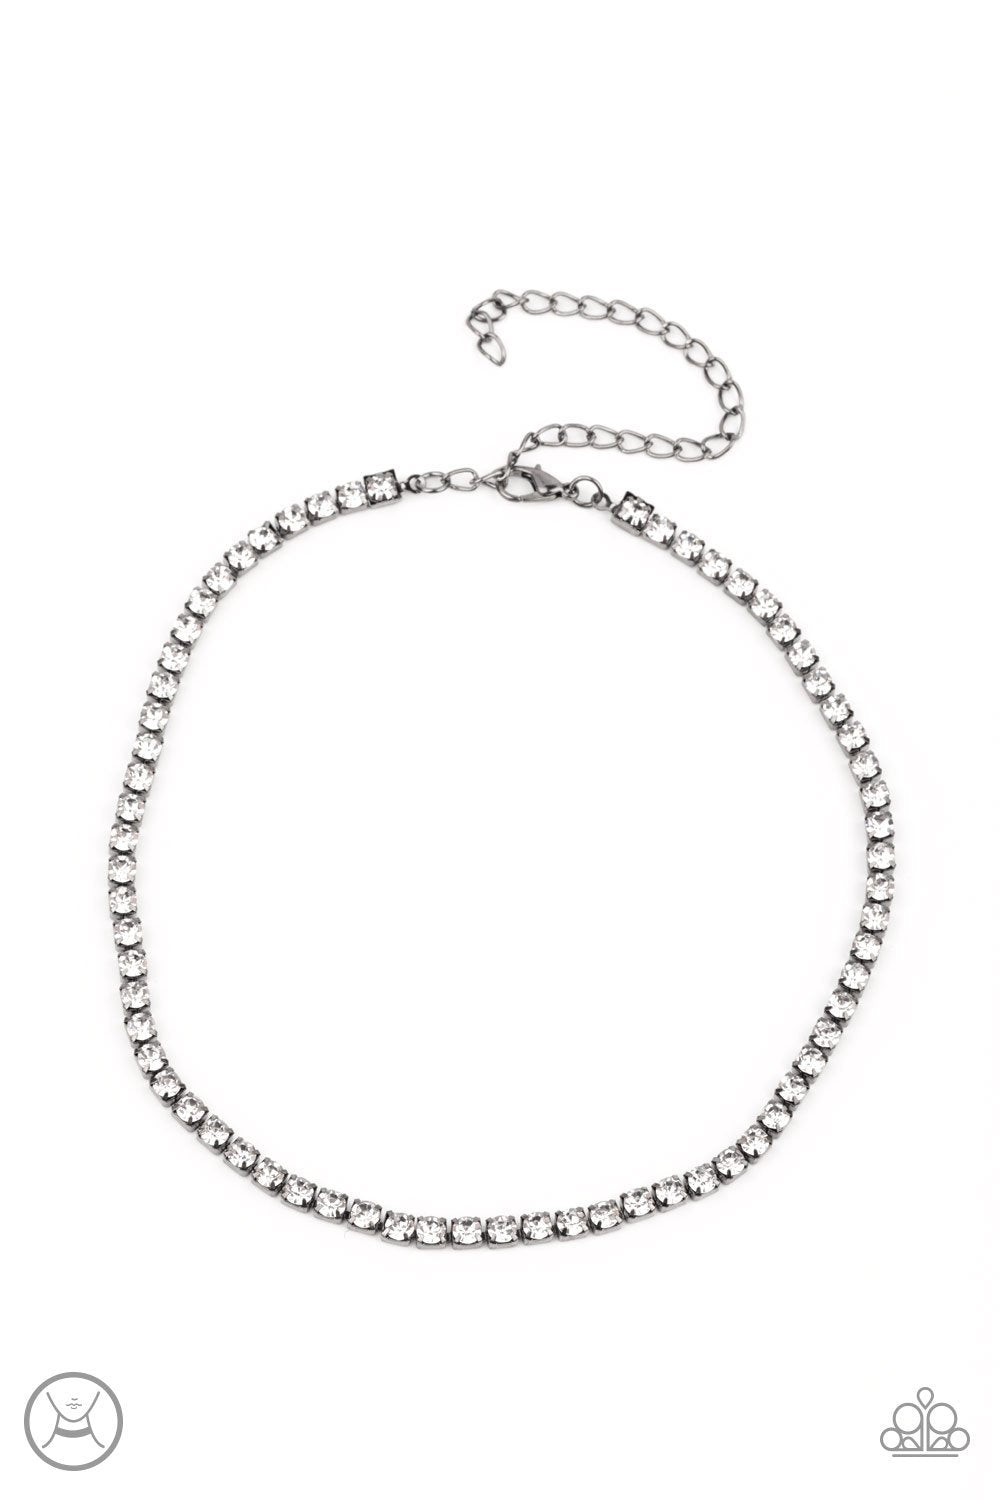 Starlight Radiance Gunmetal Black and White Rhinestone Choker Necklace - Paparazzi Accessories- lightbox - CarasShop.com - $5 Jewelry by Cara Jewels